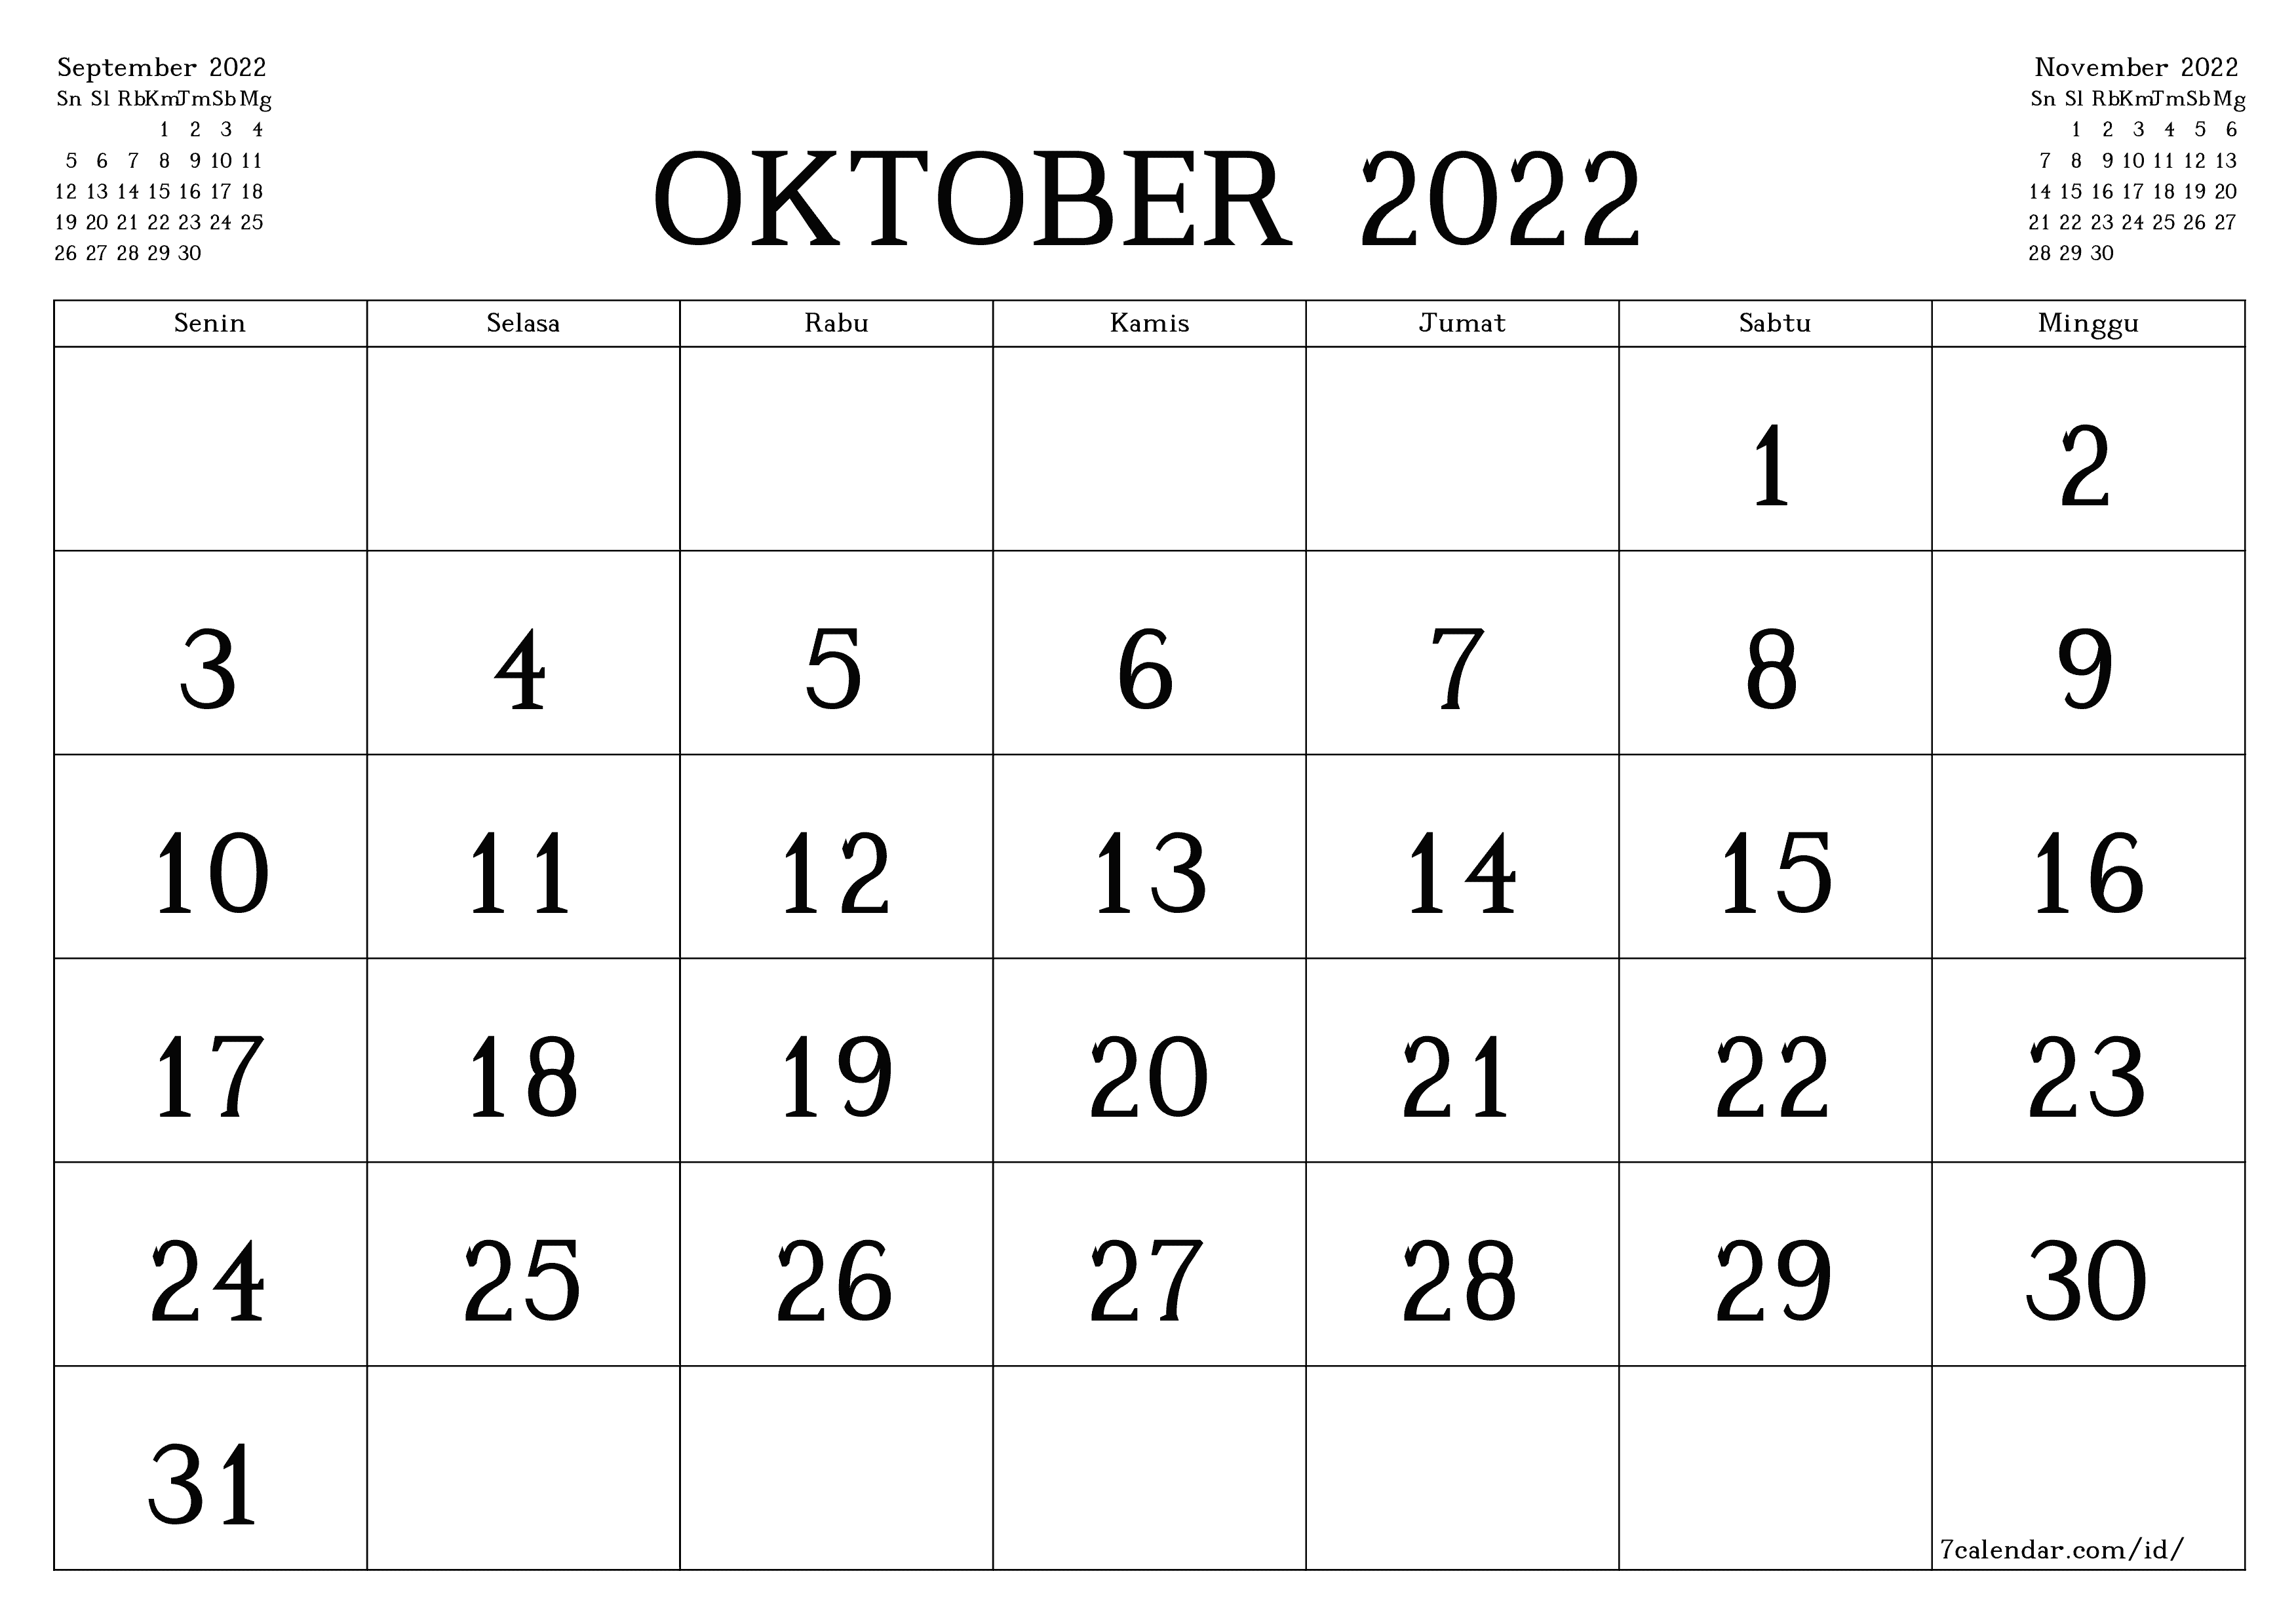 Kosongkan agenda bulanan untuk bulan Oktober 2022 dengan catatan, simpan dan cetak ke PDF PNG Indonesian - 7calendar.com